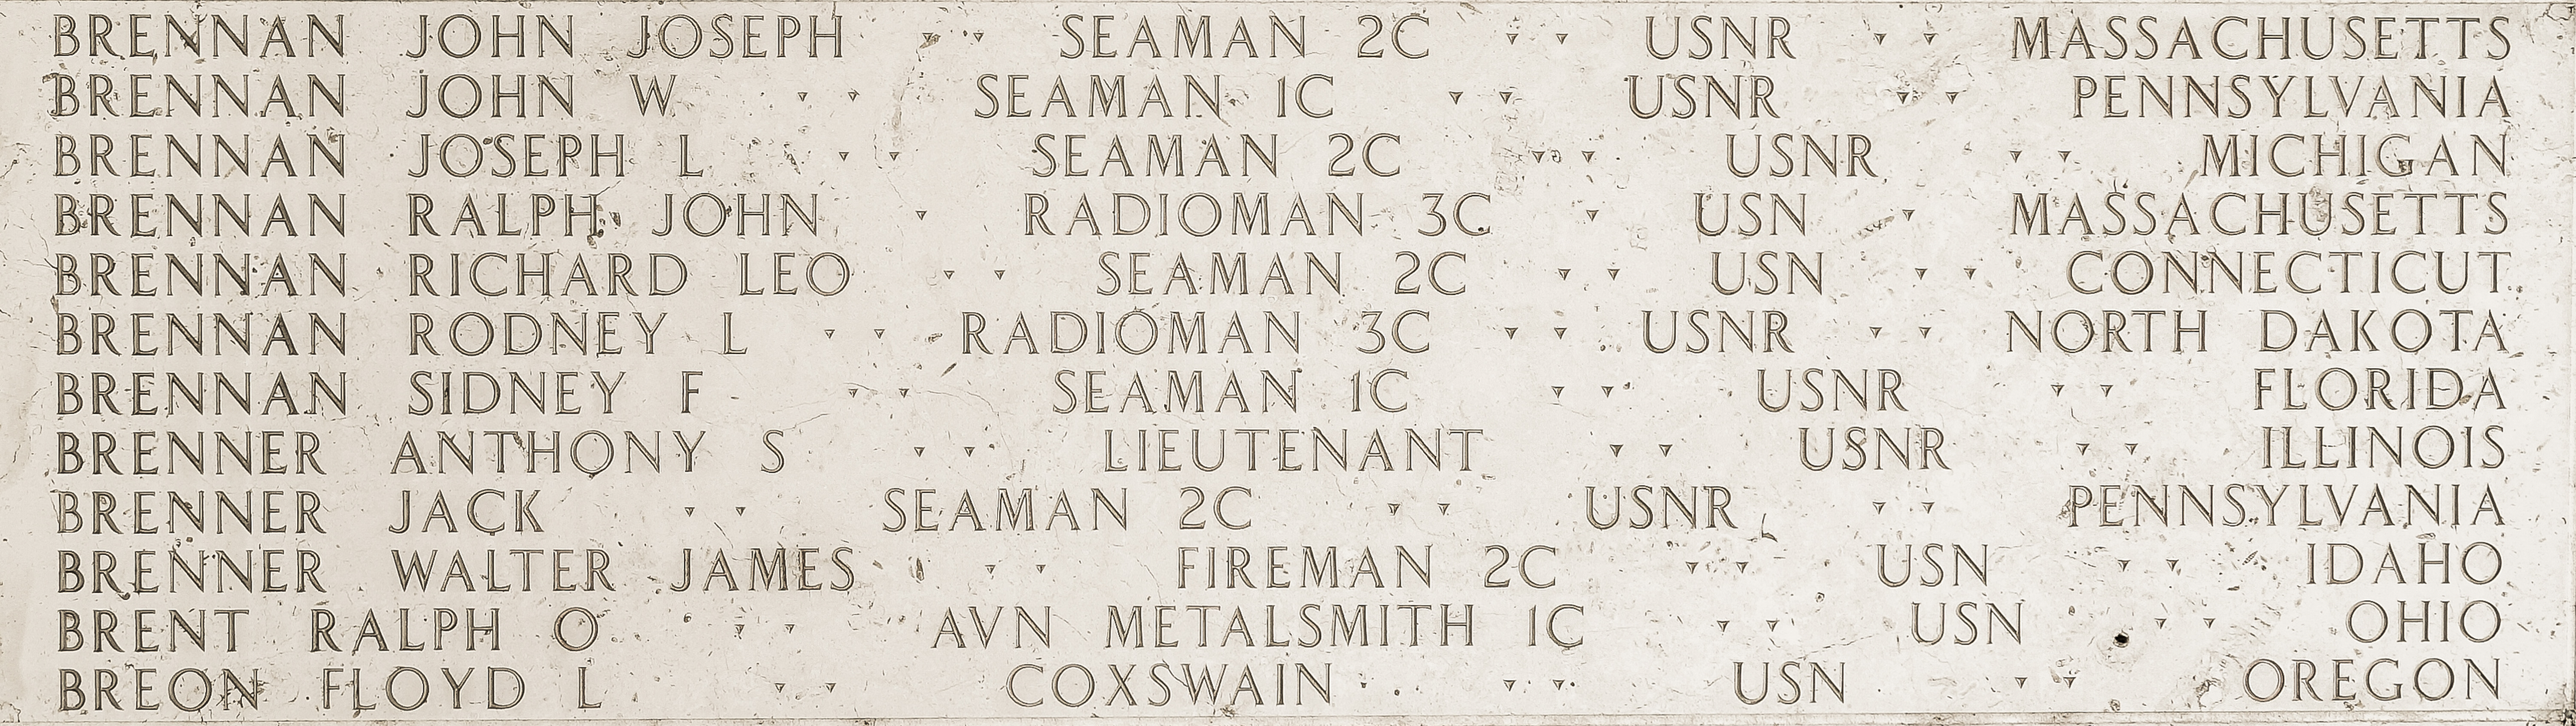 Rodney L. Brennan, Radioman Third Class